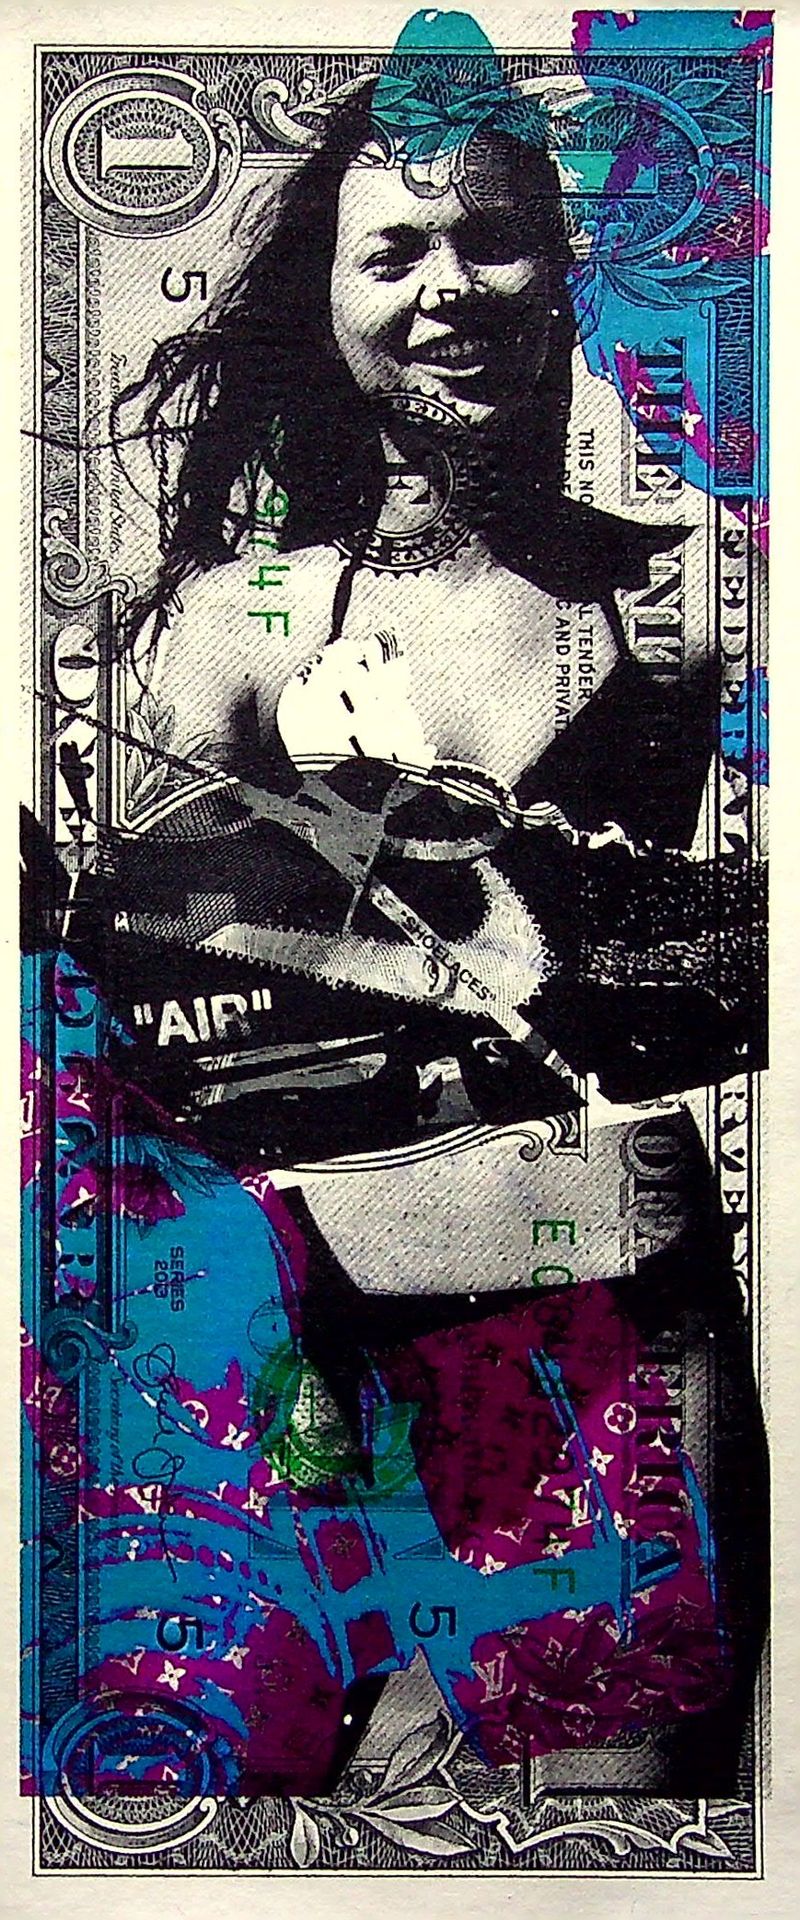 Death NYC 纽约市的死亡

Vapormax OFF WHITE与Kate Moss合作，2020年

1美元钞票上的纽约市死神的原版绢书

在法案的背&hellip;